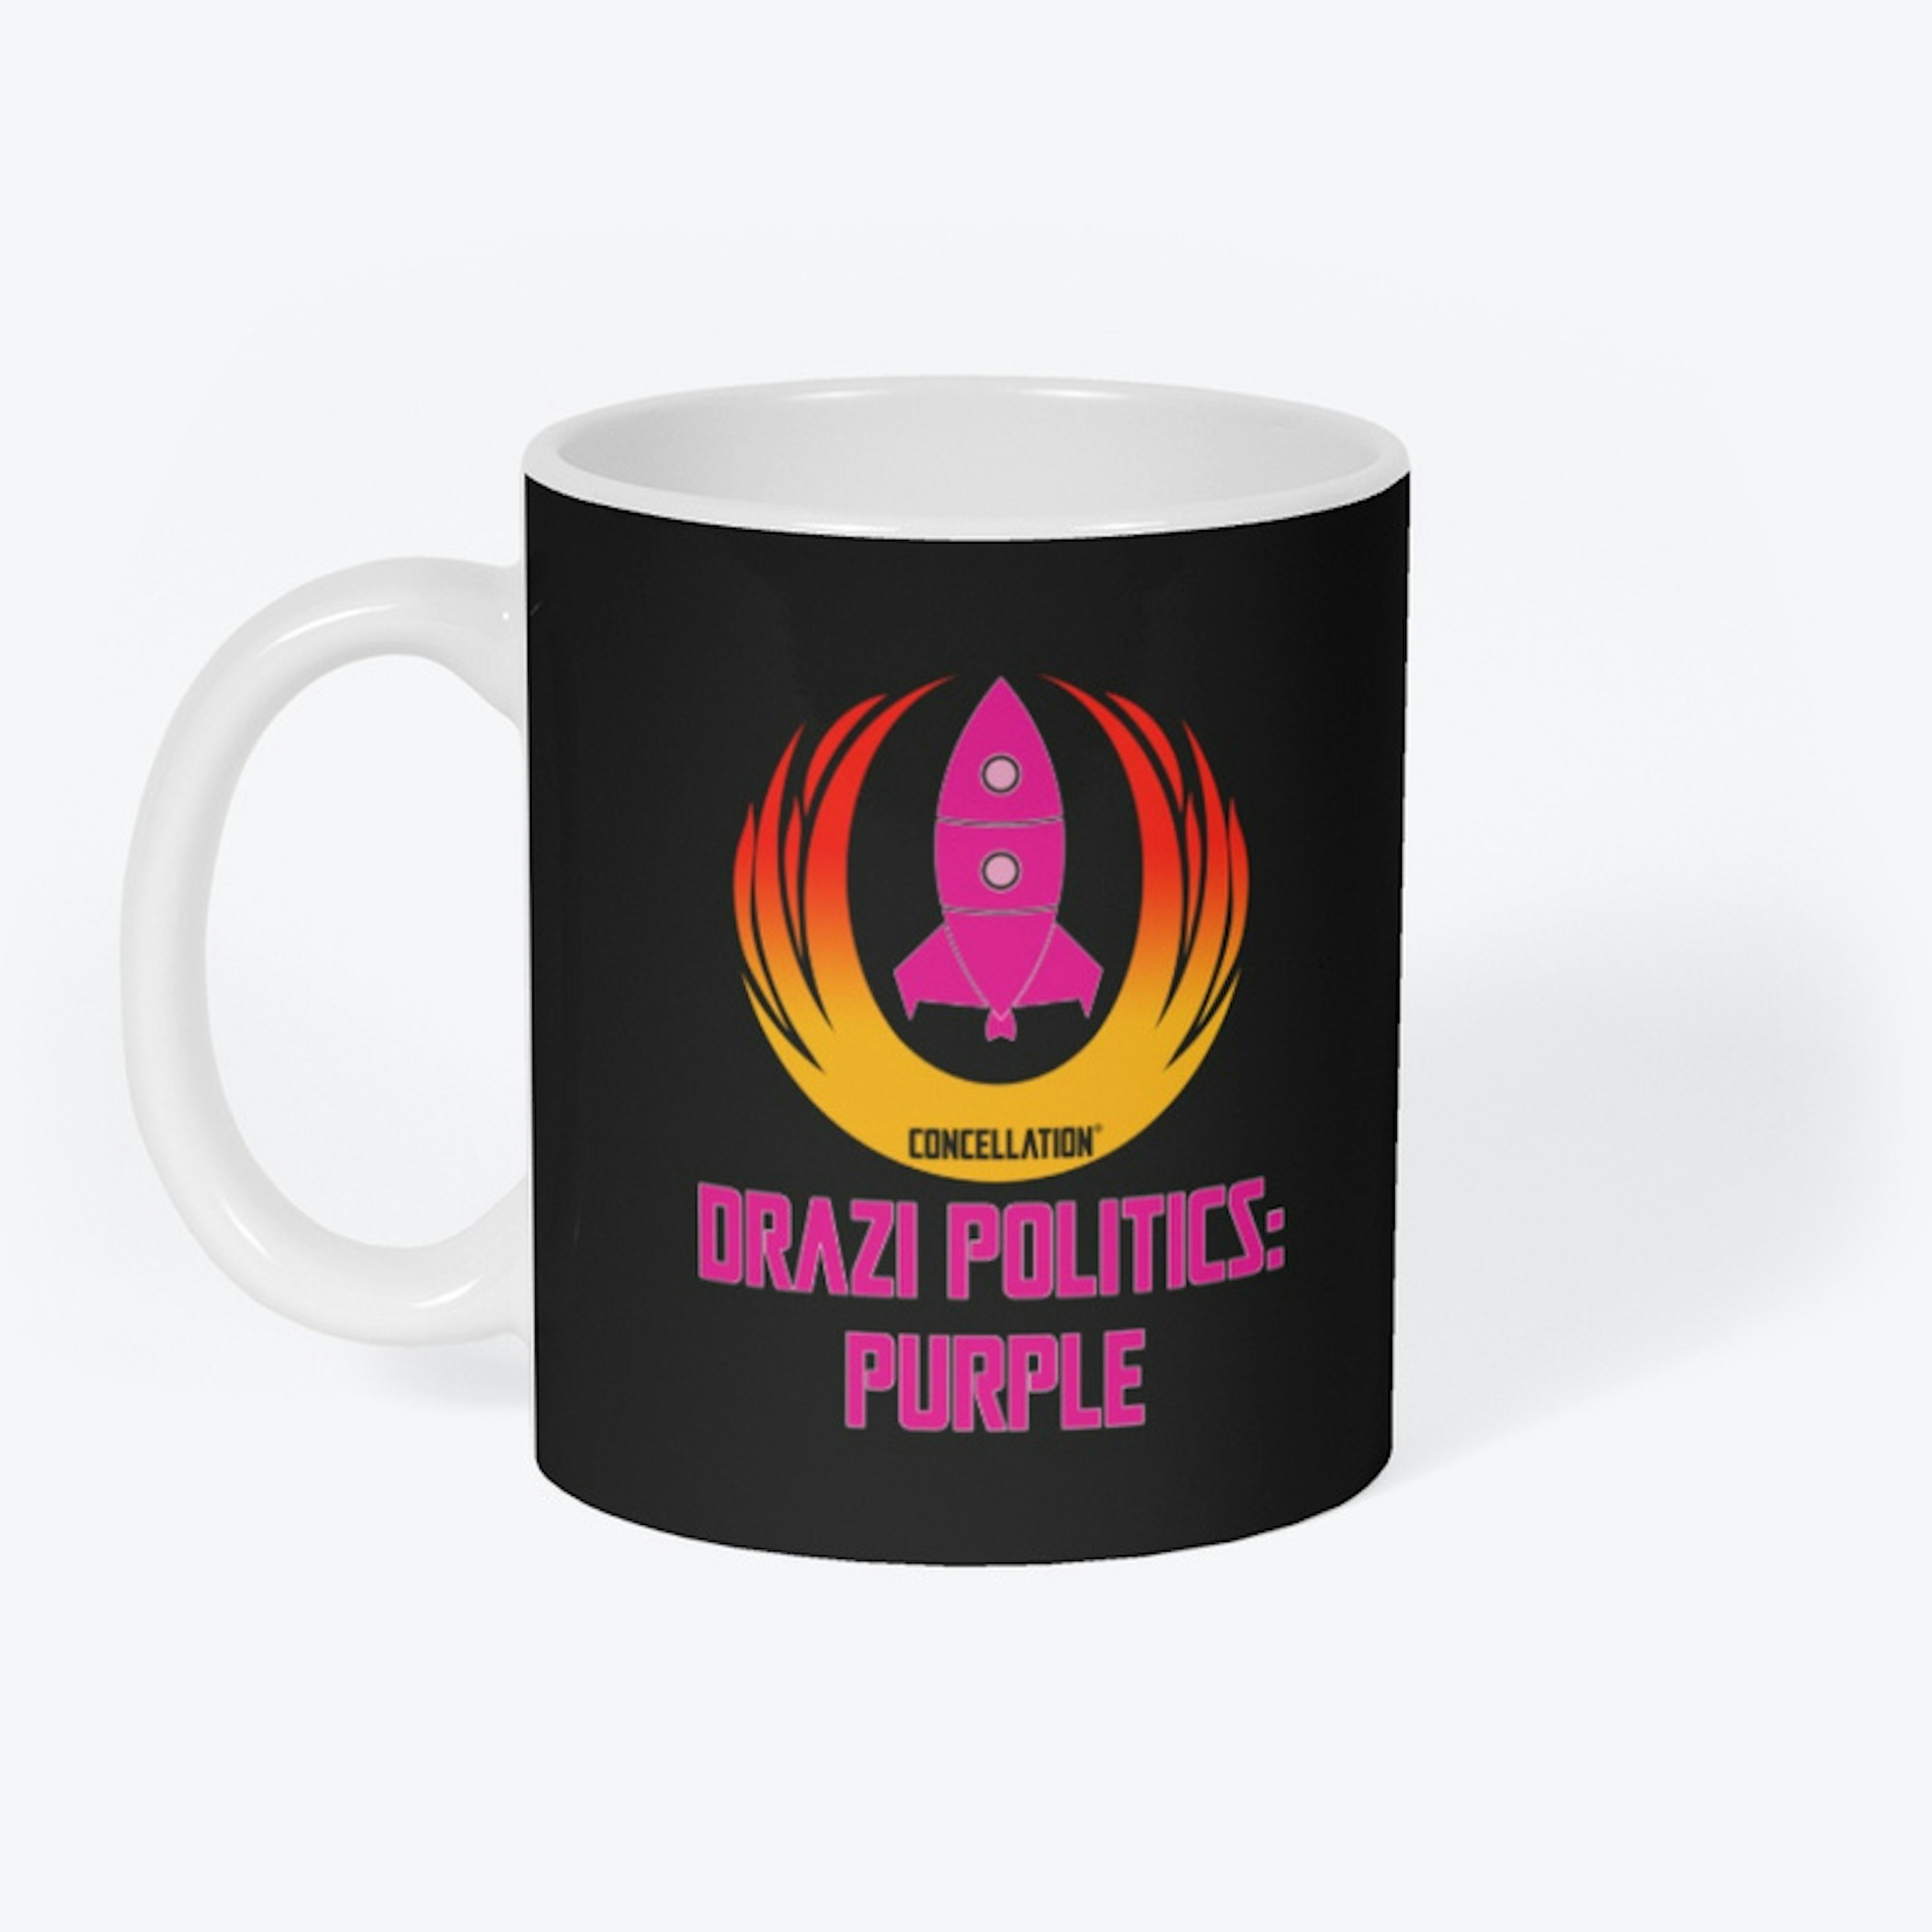 Drazi Politics: Purple (2021 Logo)